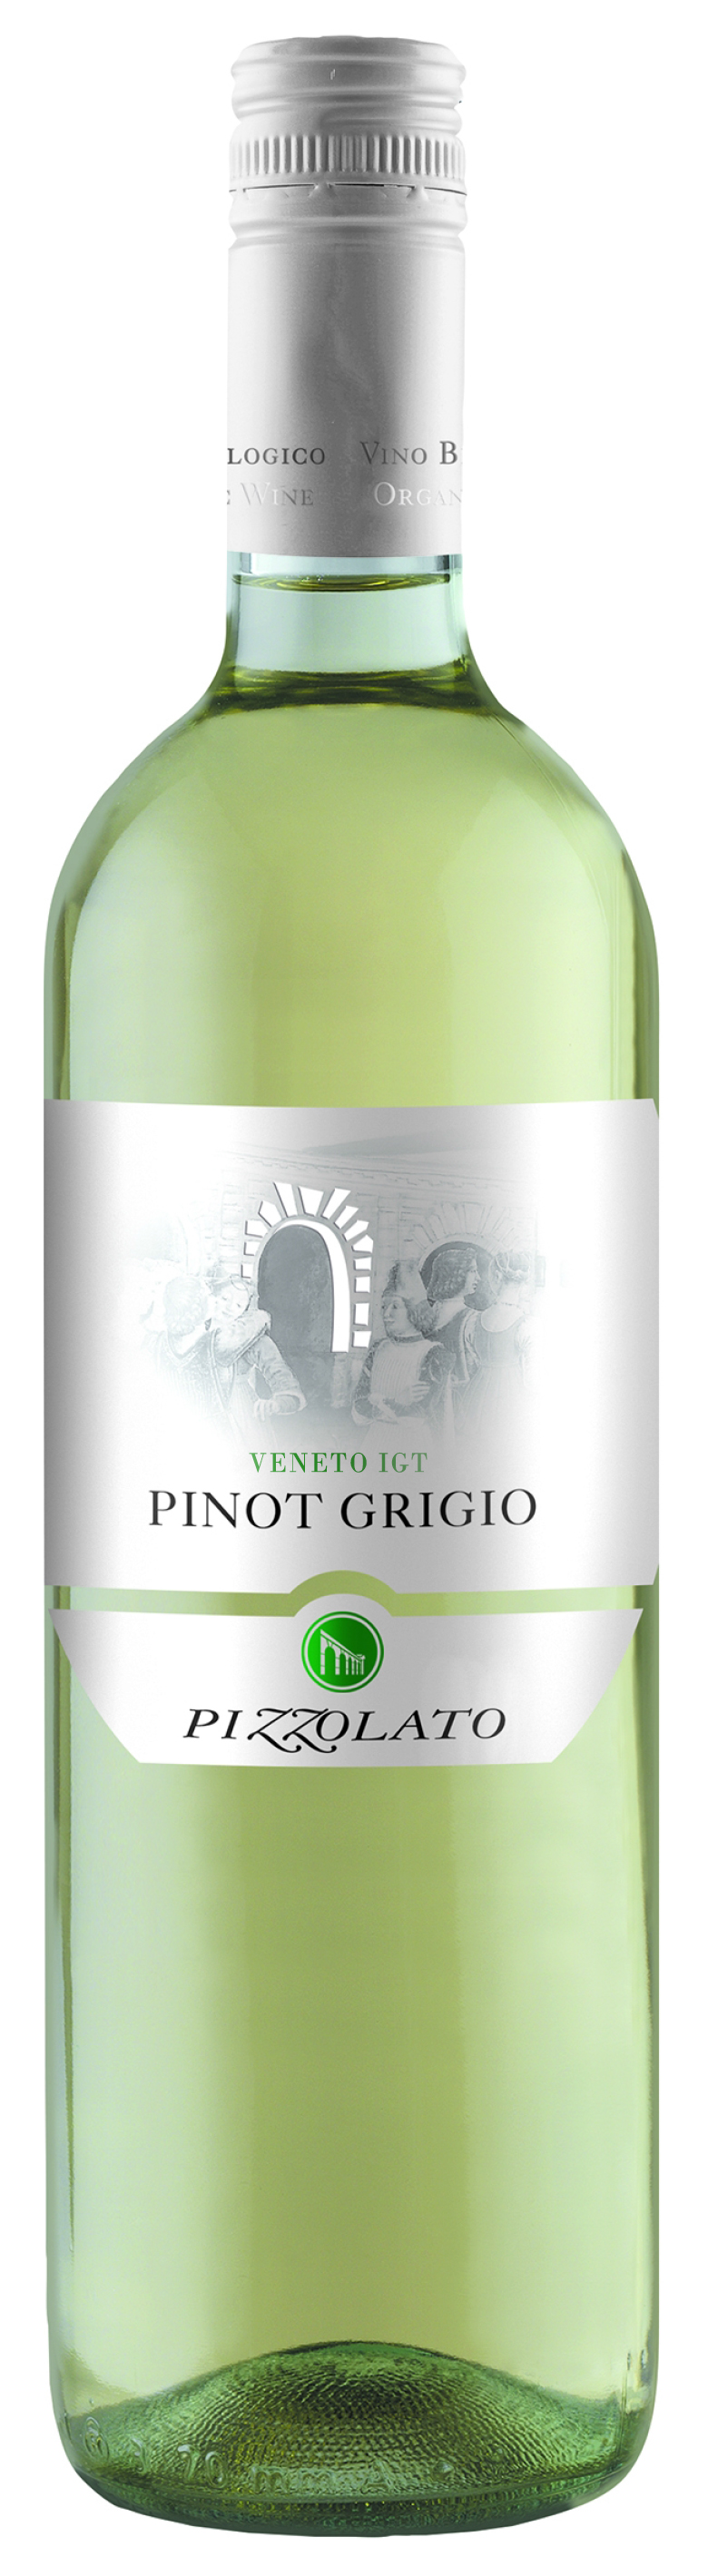 La Cantina Pizzolato Organic Pinot Grigio. The #1 selling Organic Pinot Grigio in all of Italy by Natural Merchants